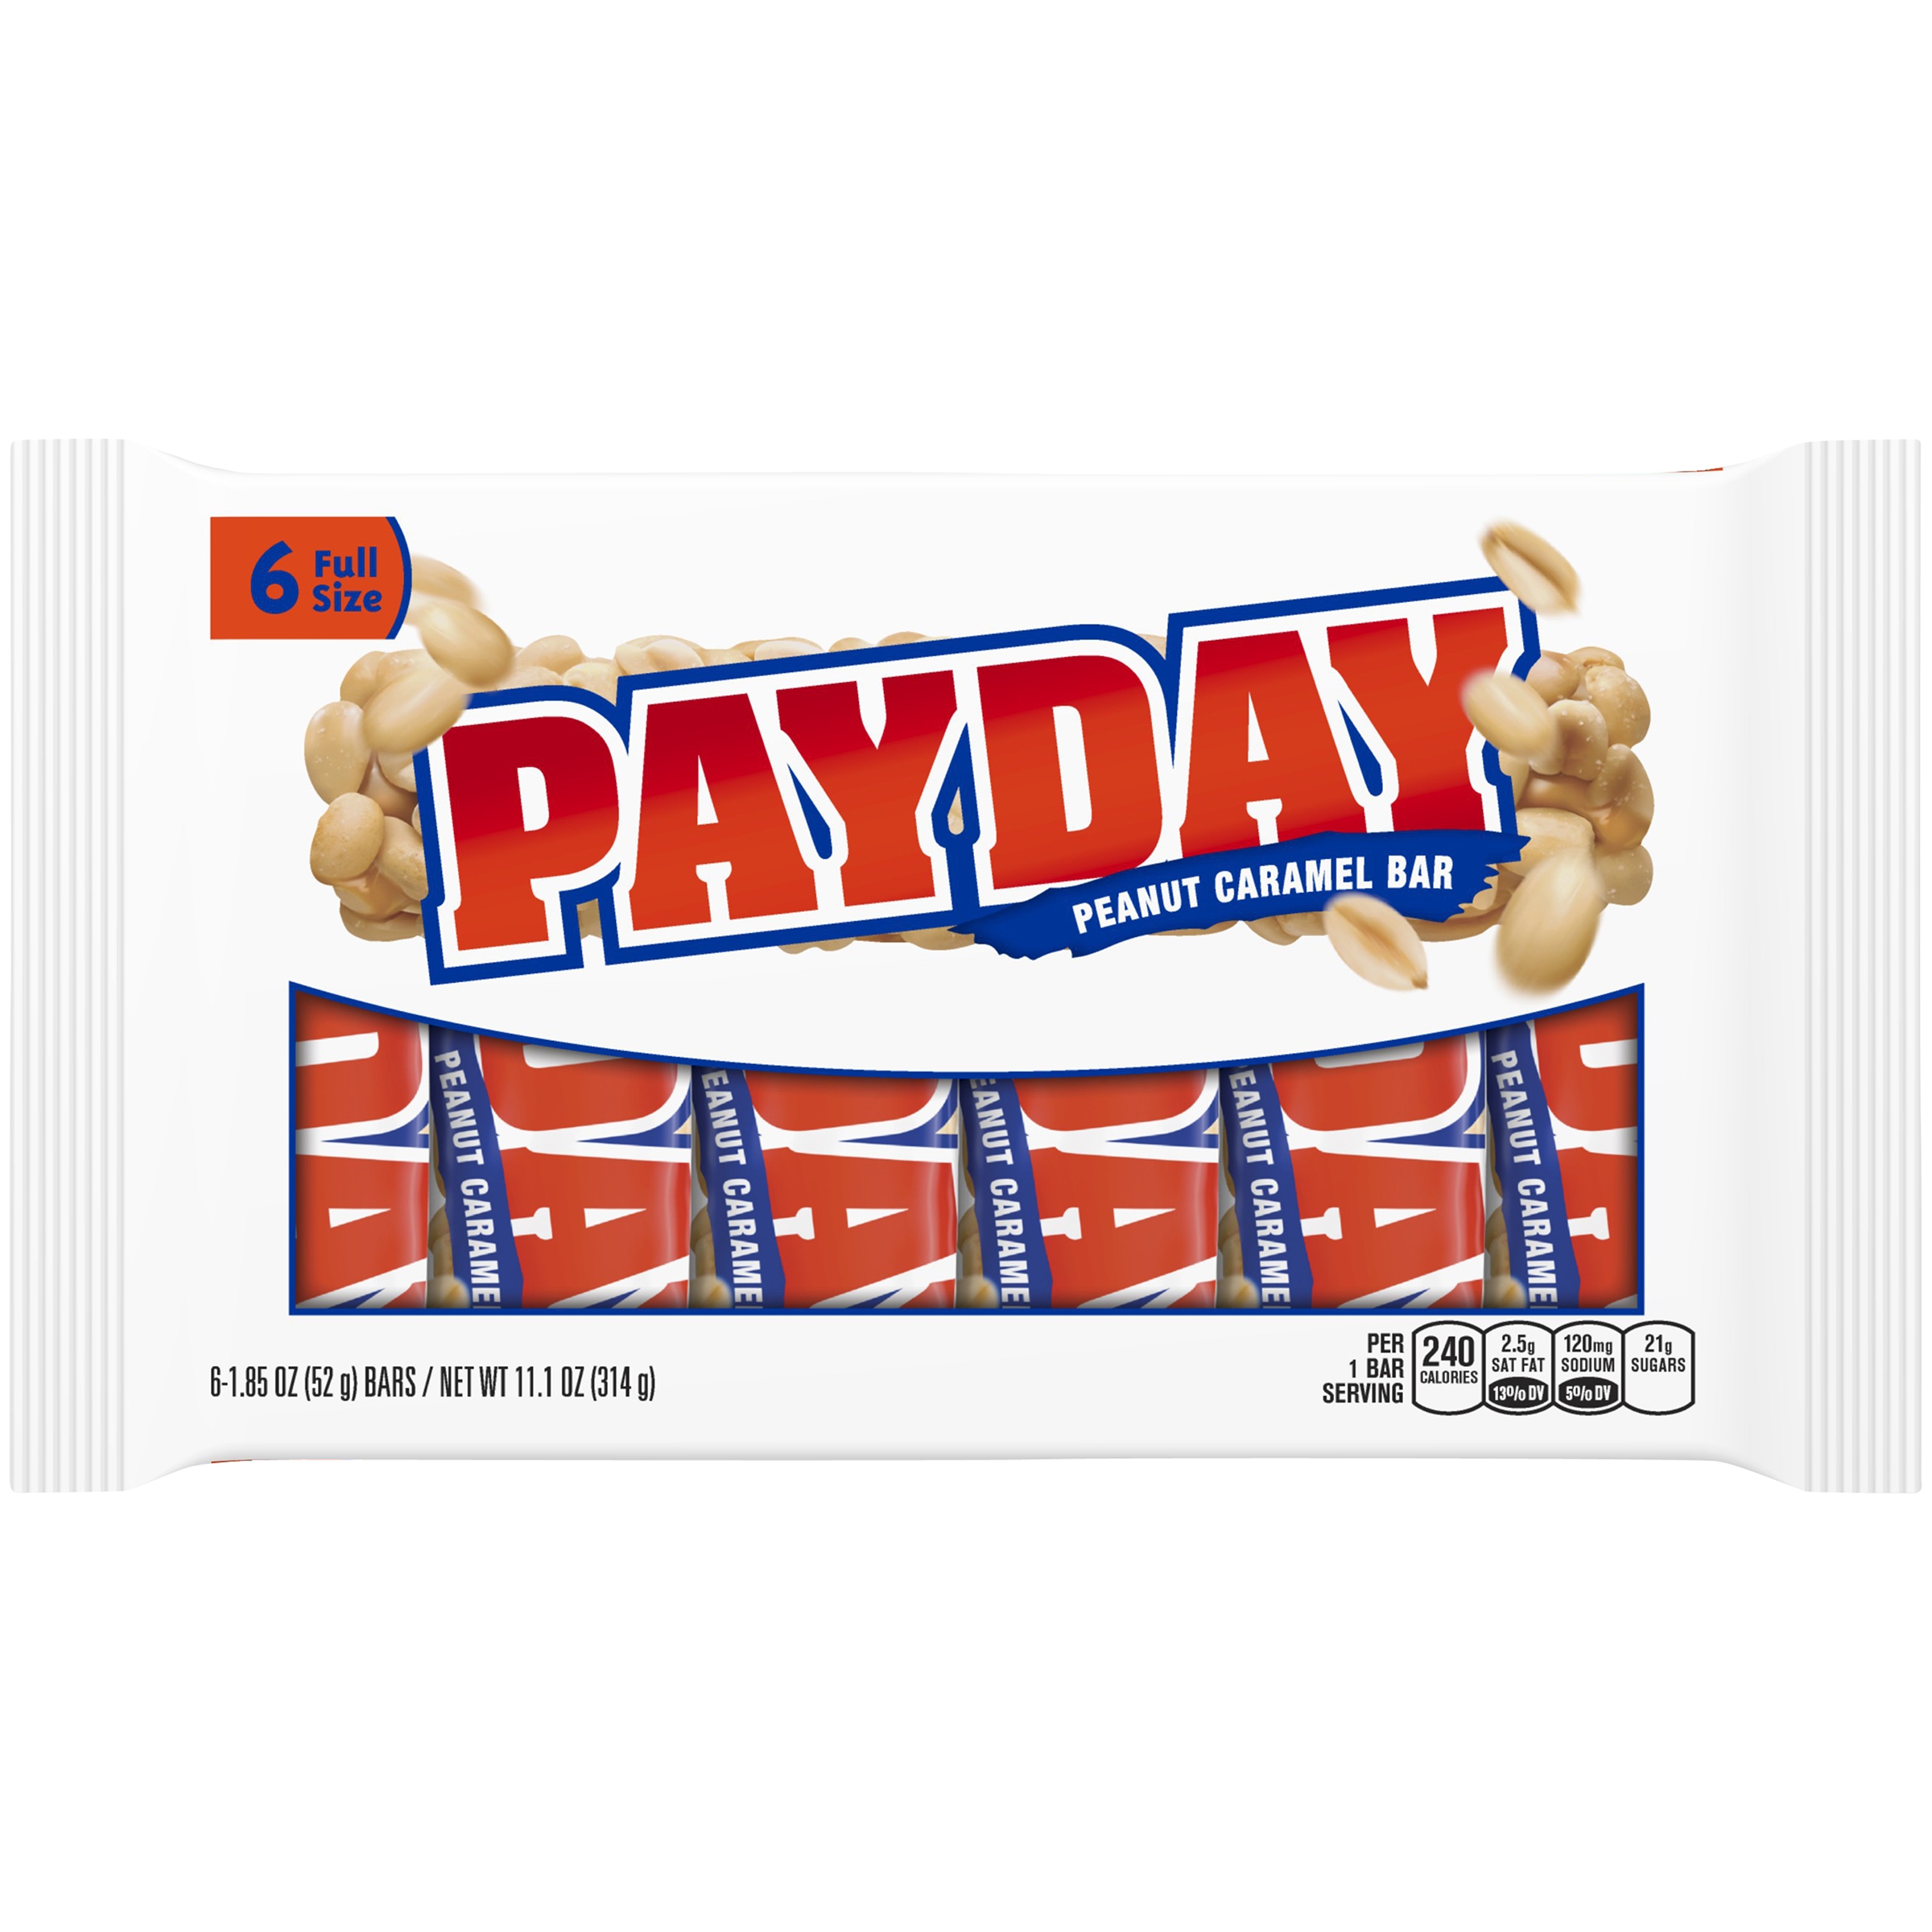 Payday Peanut Caramel Bar, 1.85 Oz., 6 Count - image 1 of 7